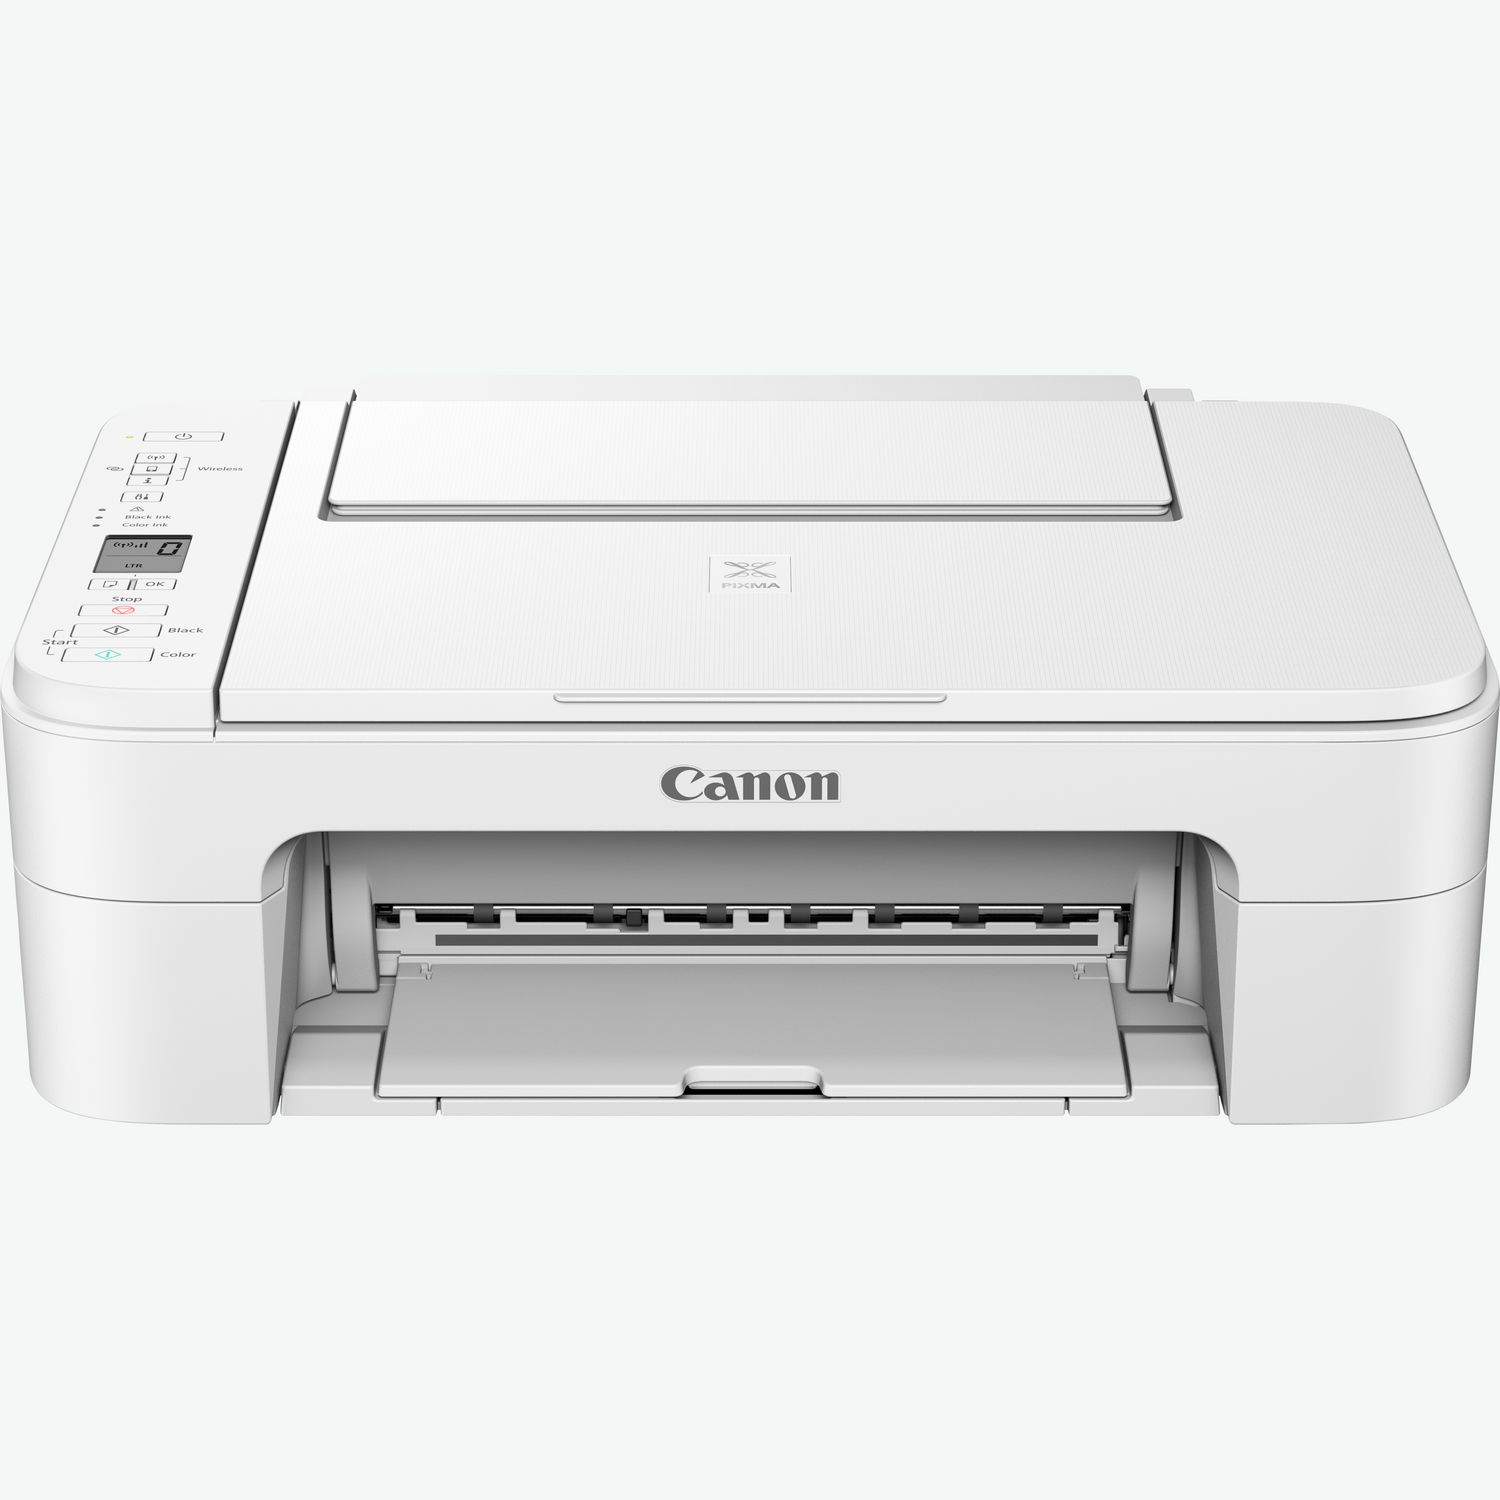 Canon Pixma MG3650S Multifunction Inkjet Printer - Black for sale online